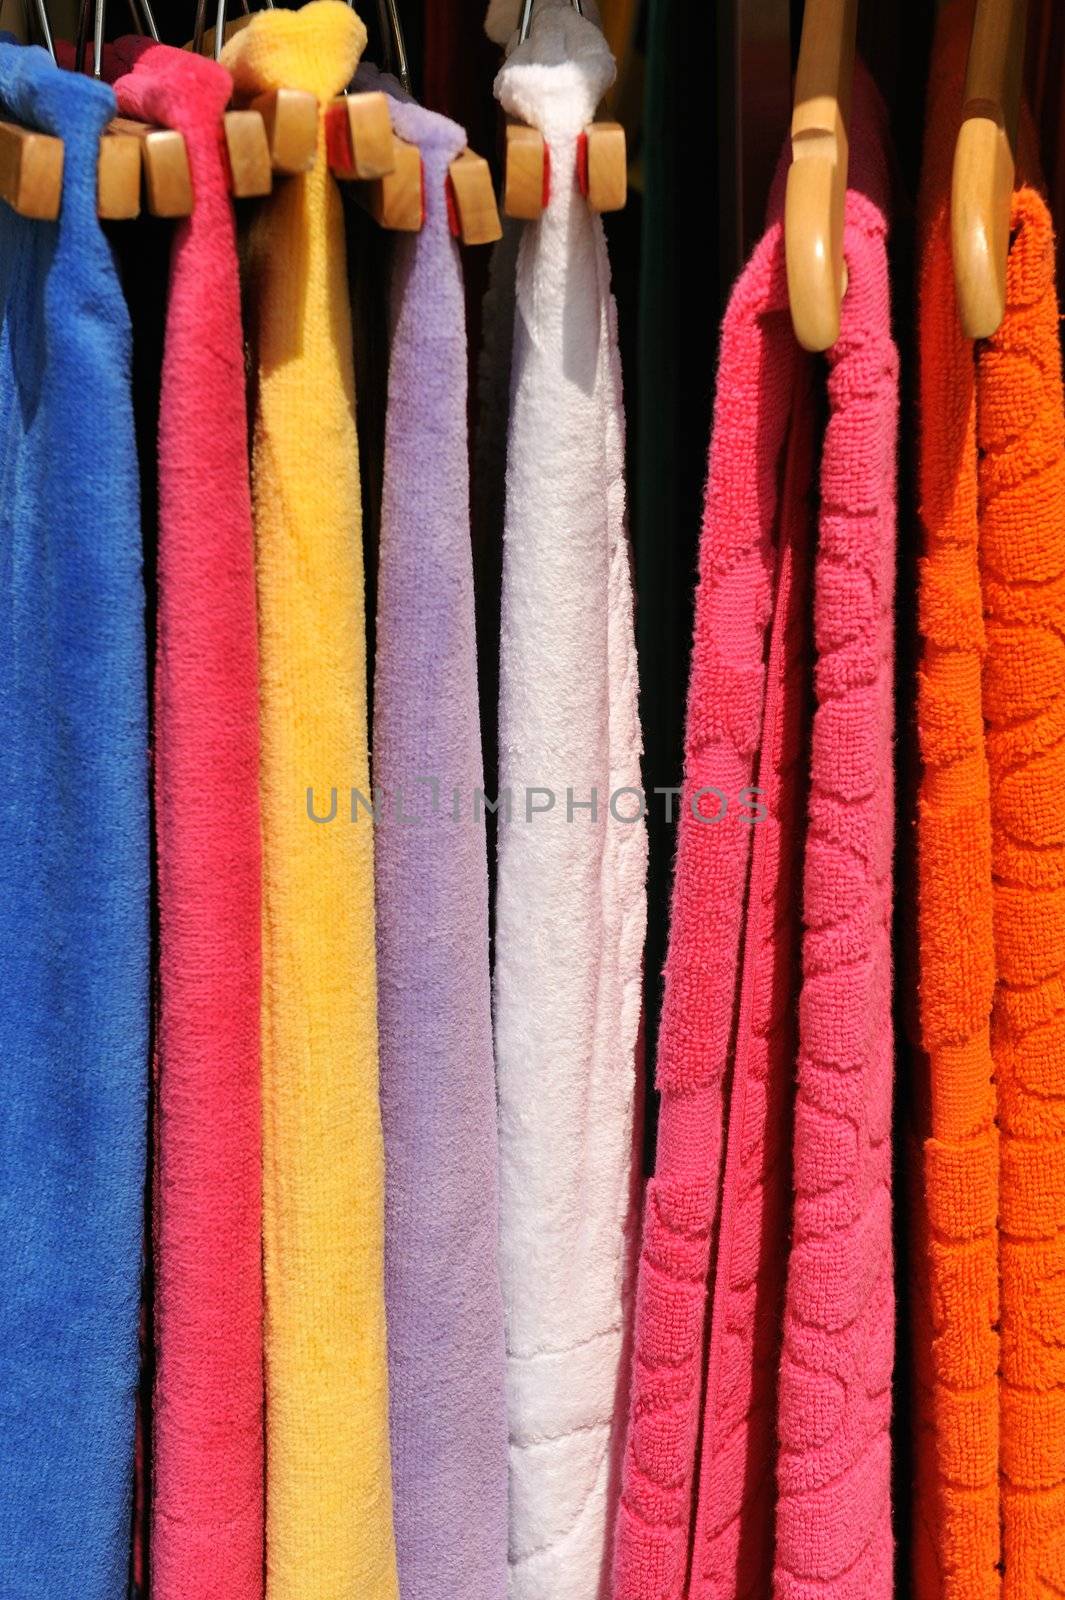 Frame filling capture of colorful towels on sale